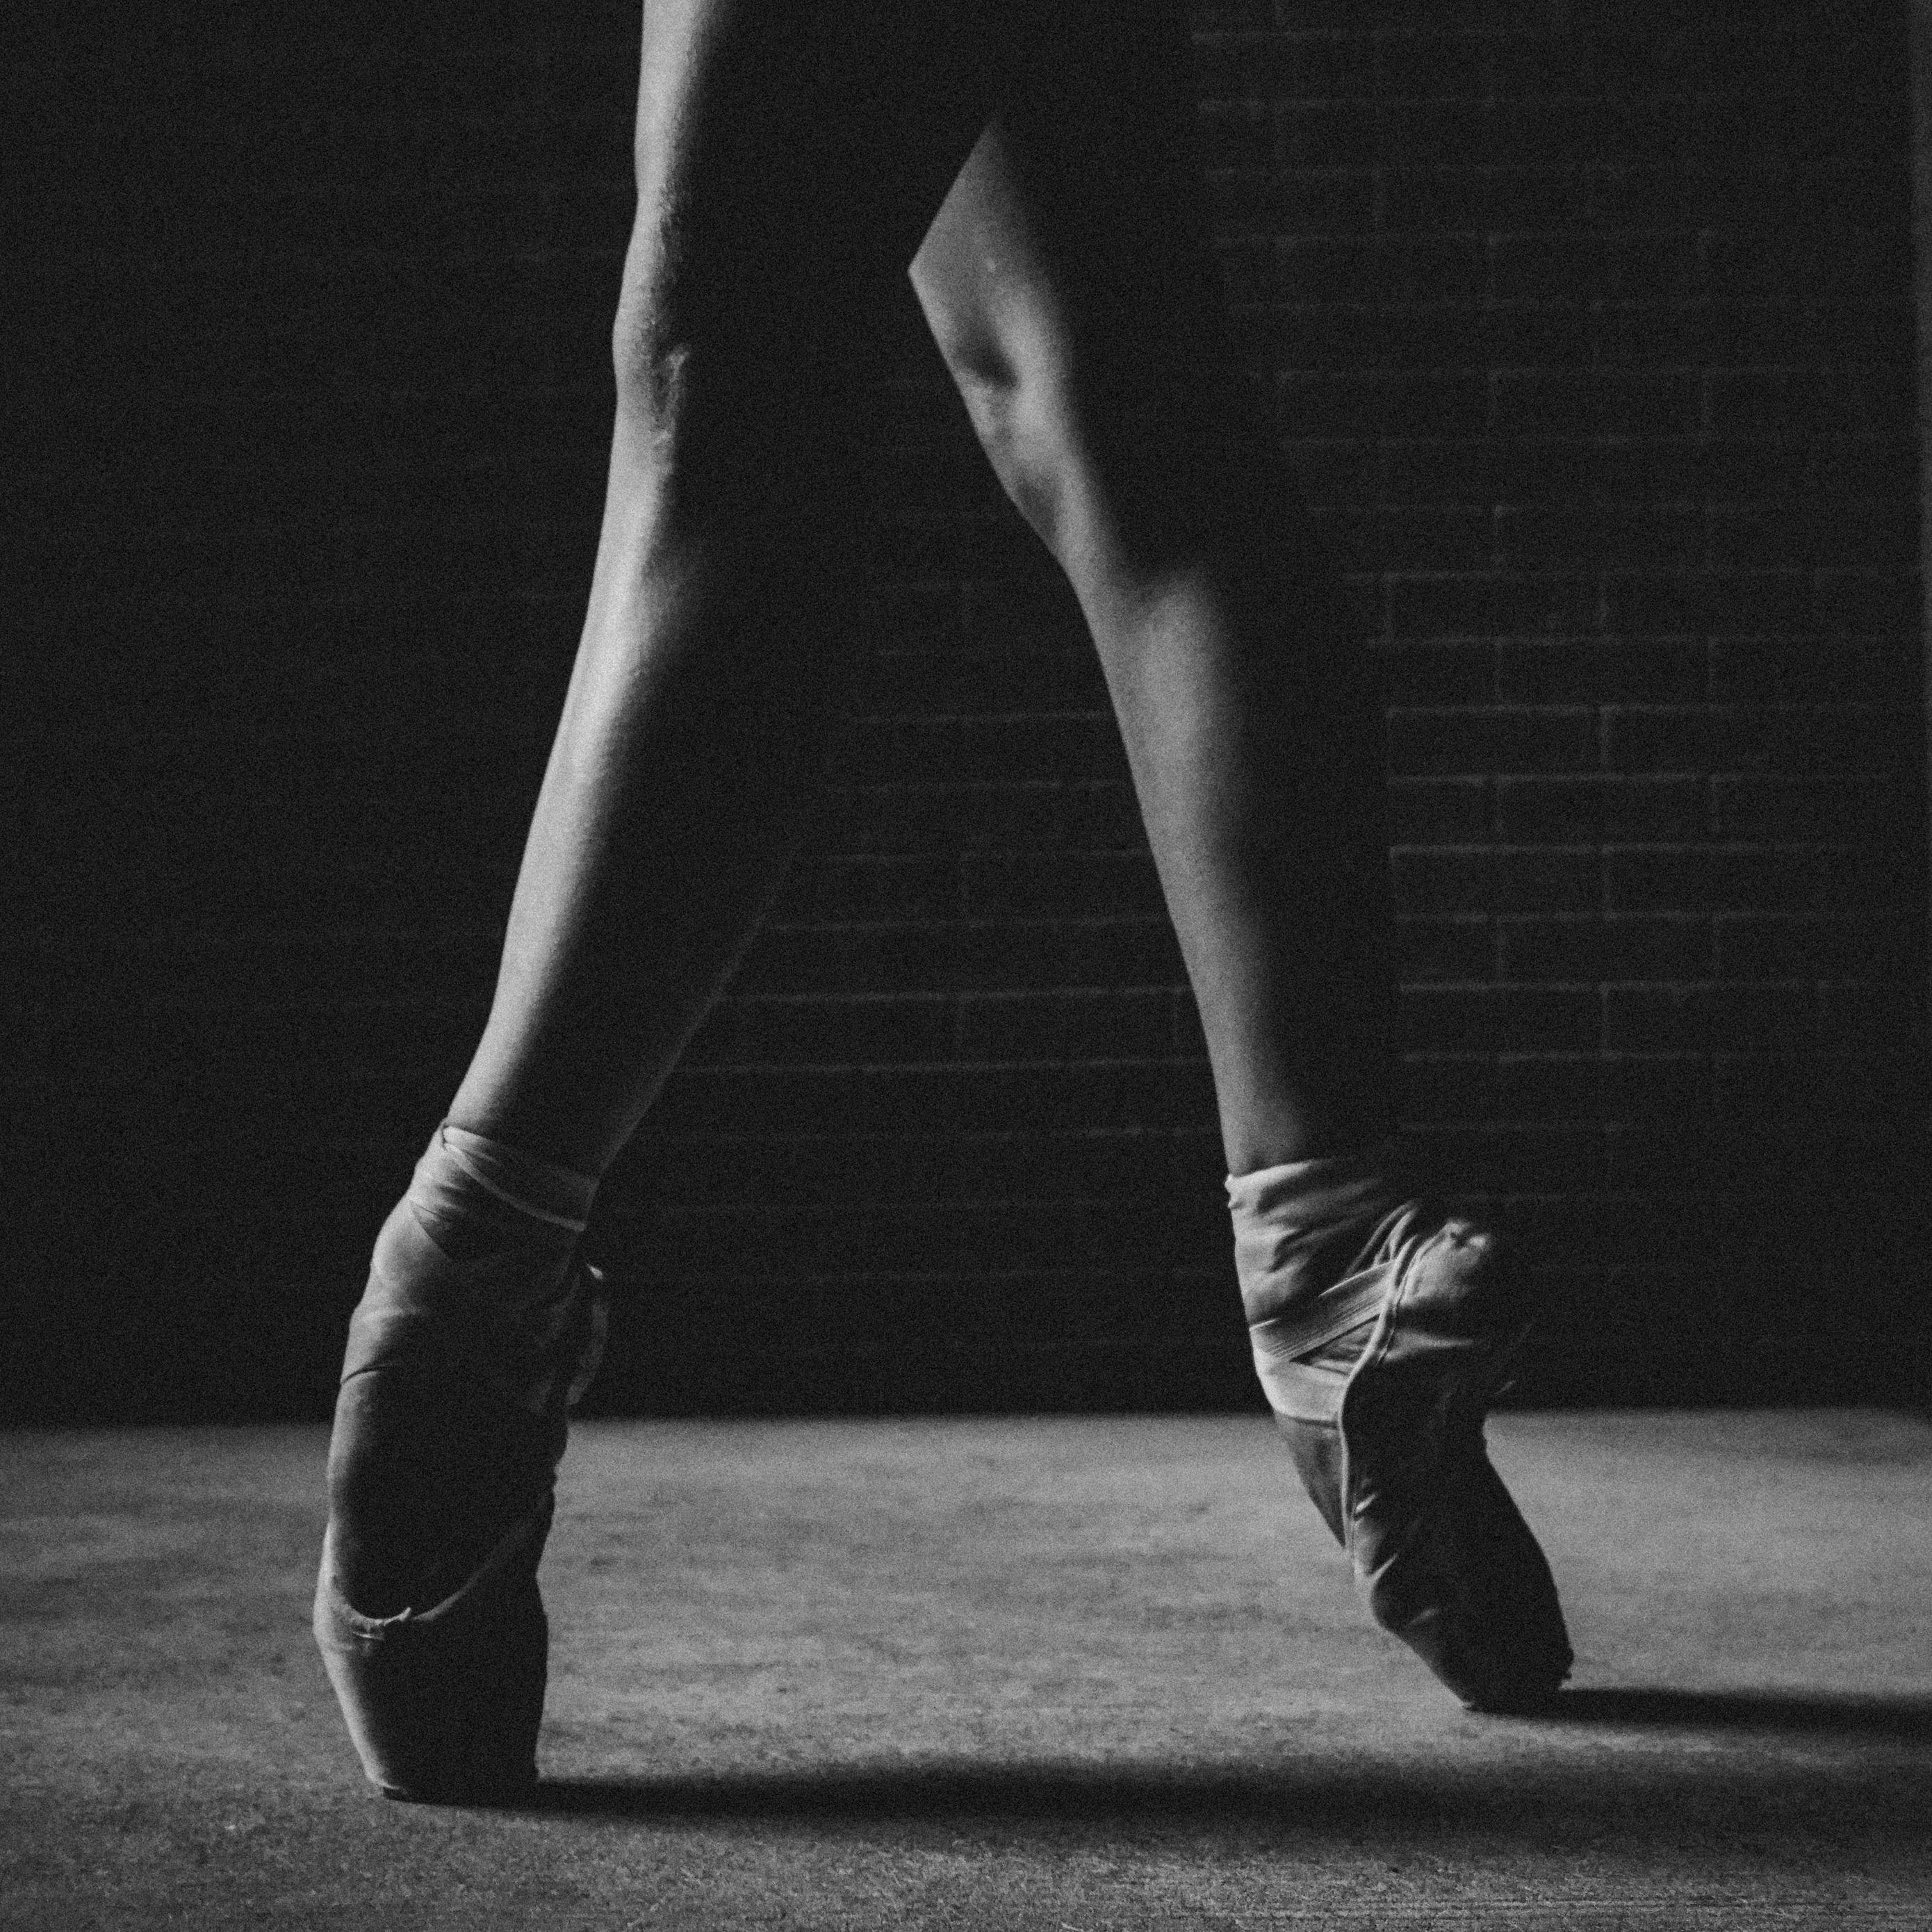 Download wallpaper 2780x2780 ballerina, pointe shoes, legs, bw